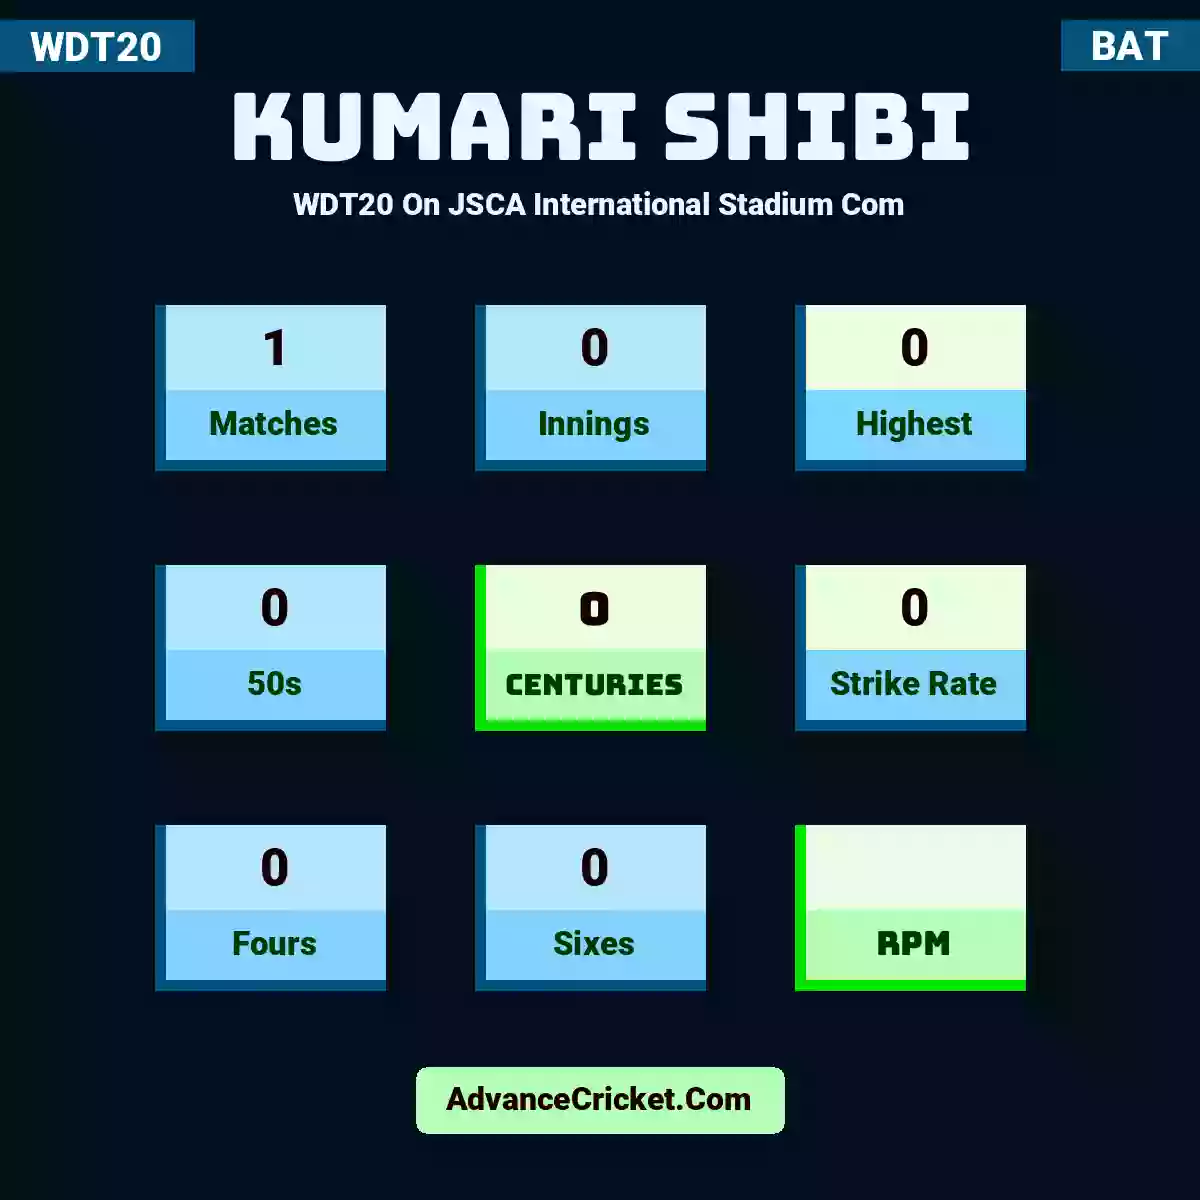 Kumari Shibi WDT20  On JSCA International Stadium Com, Kumari Shibi played 1 matches, scored 0 runs as highest, 0 half-centuries, and 0 centuries, with a strike rate of 0. K.Shibi hit 0 fours and 0 sixes.